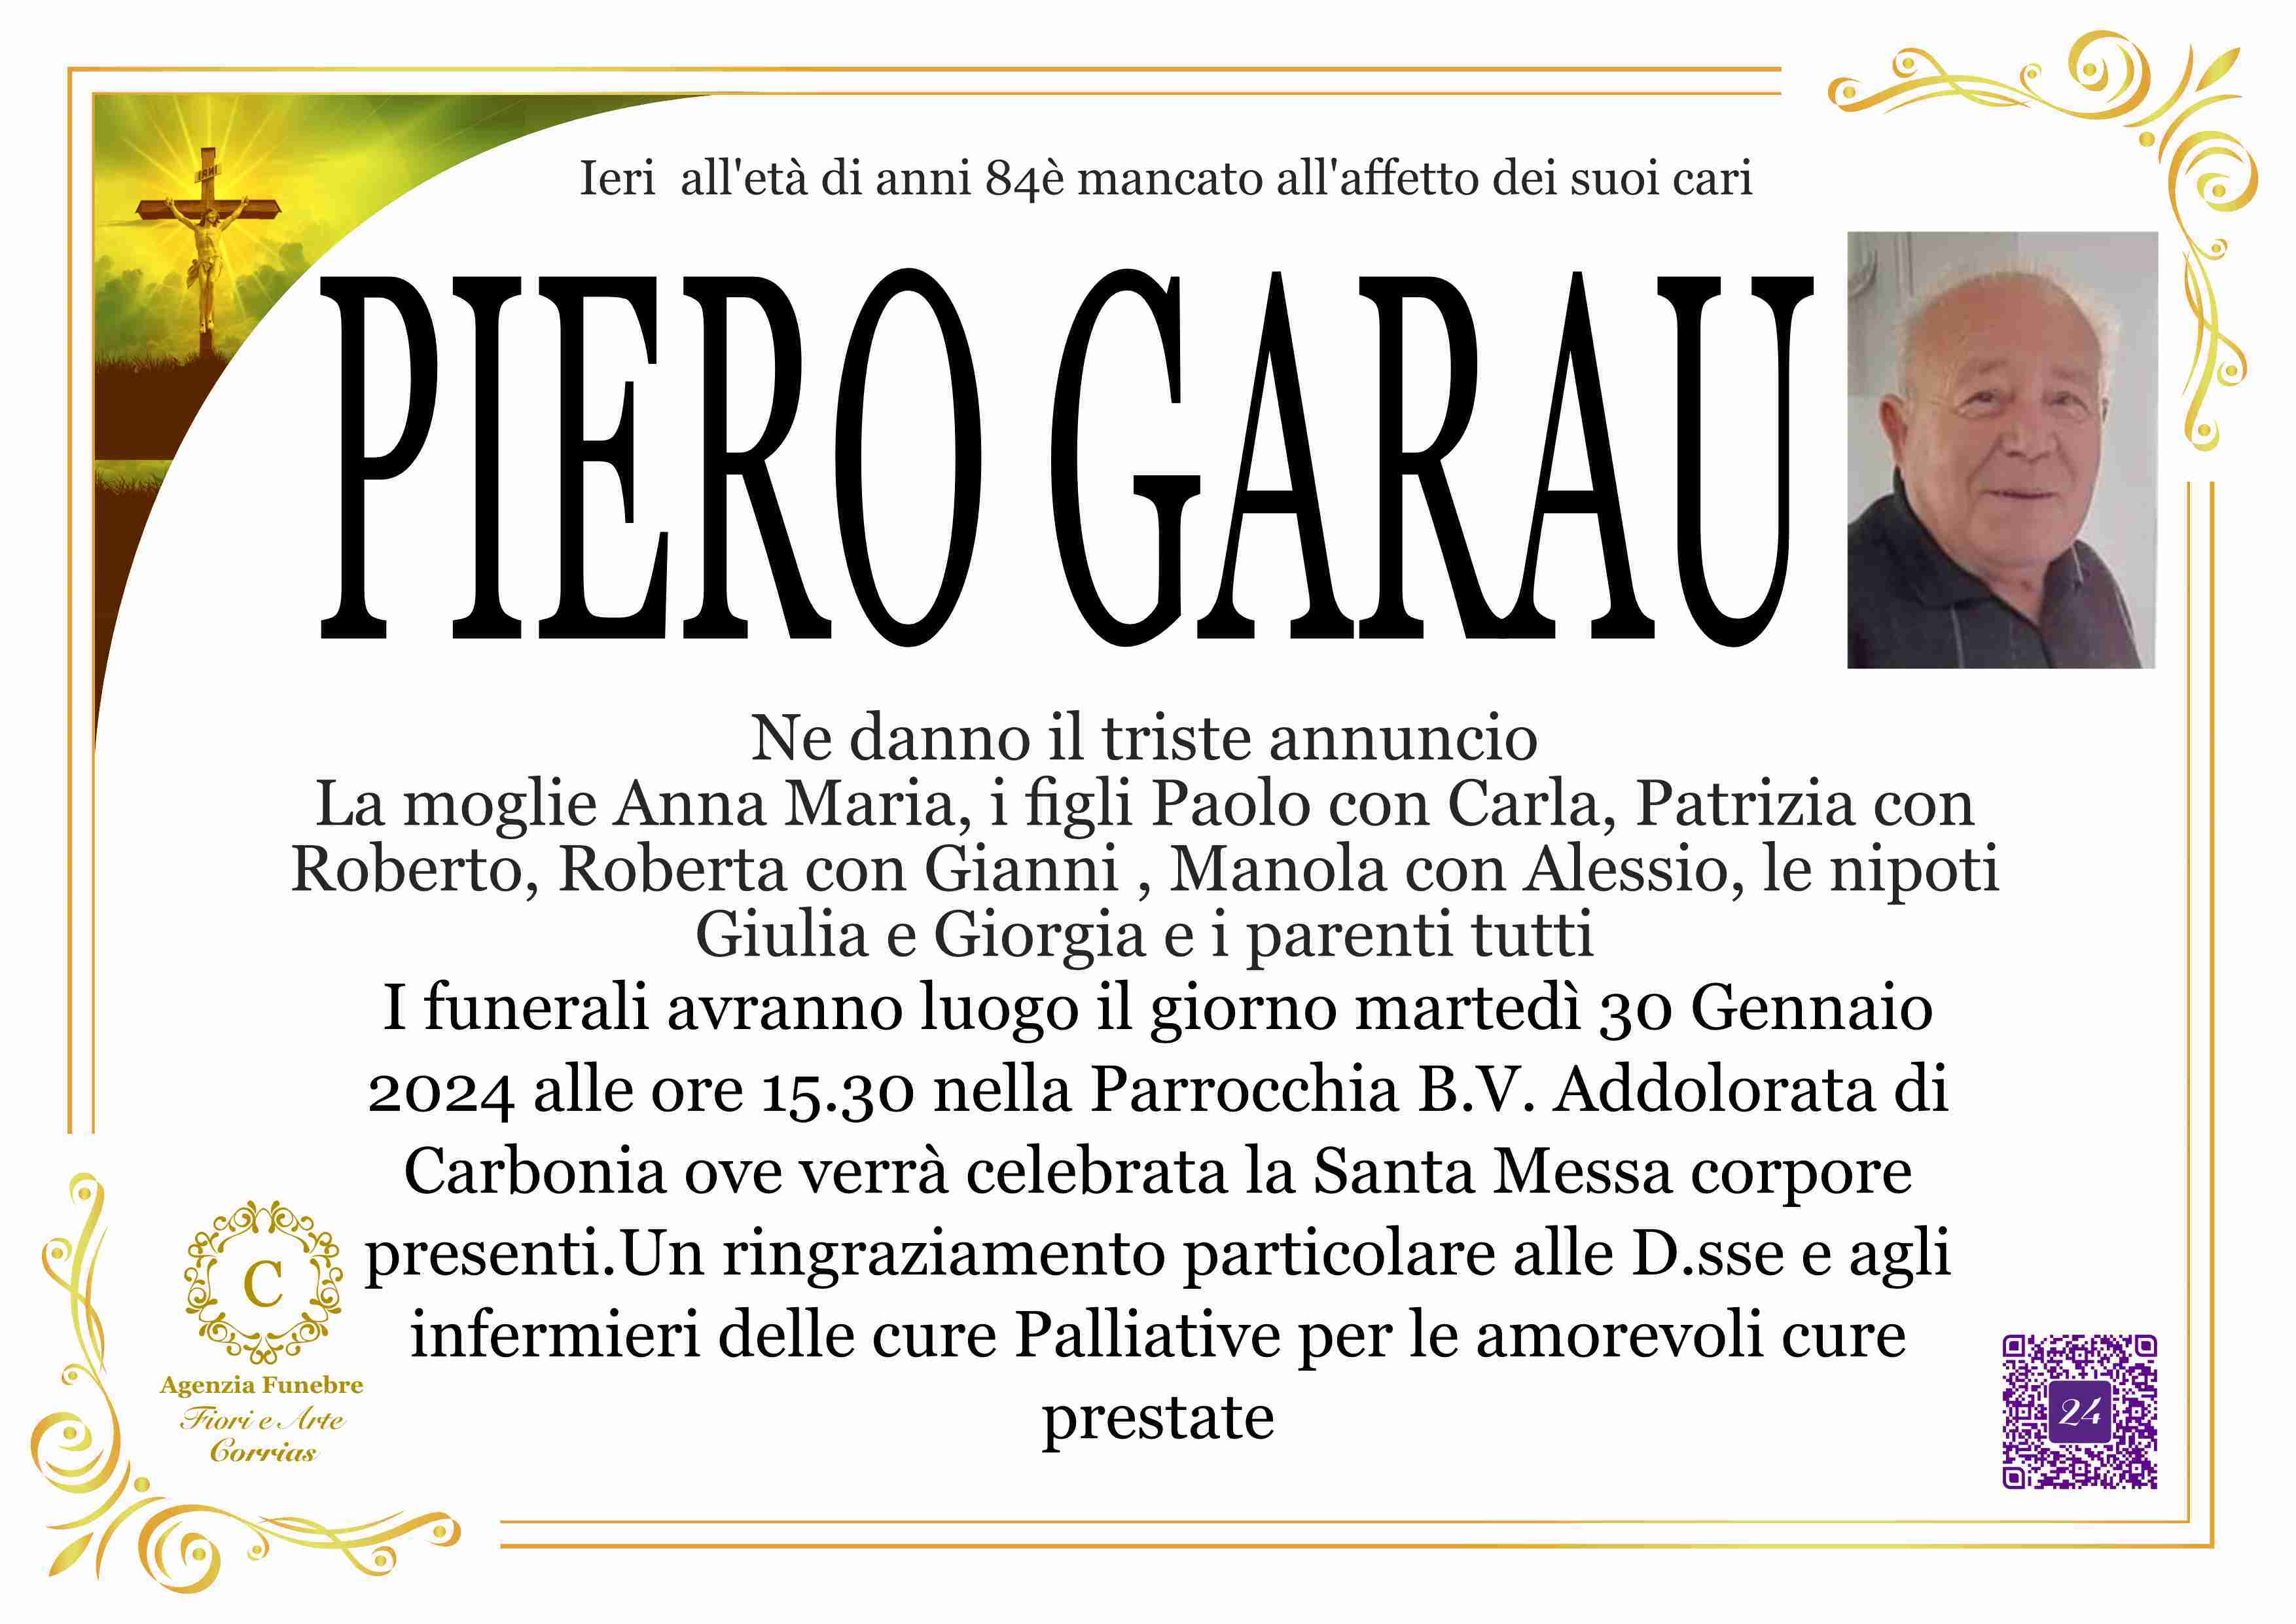 Piero Garau